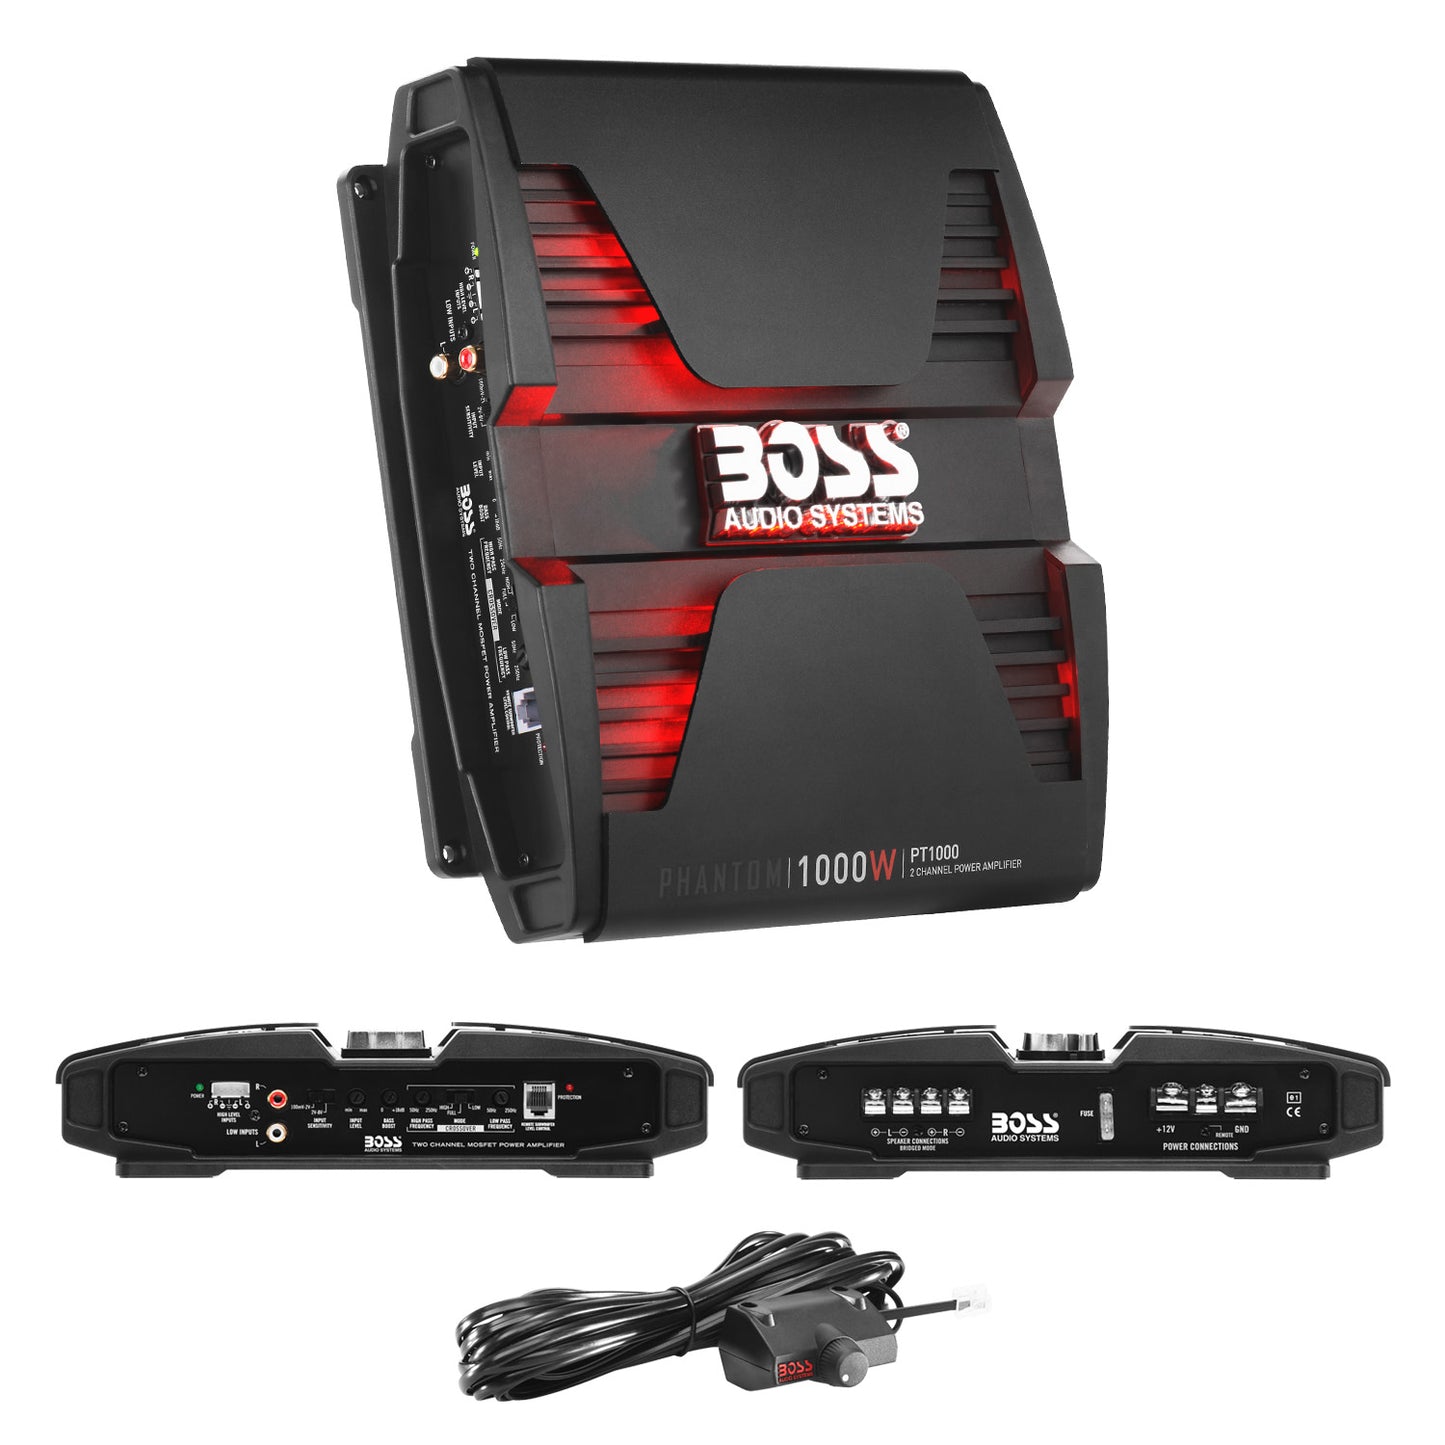 BOSS Audio Systems PT1000 Phantom Series Car Audio Stereo 